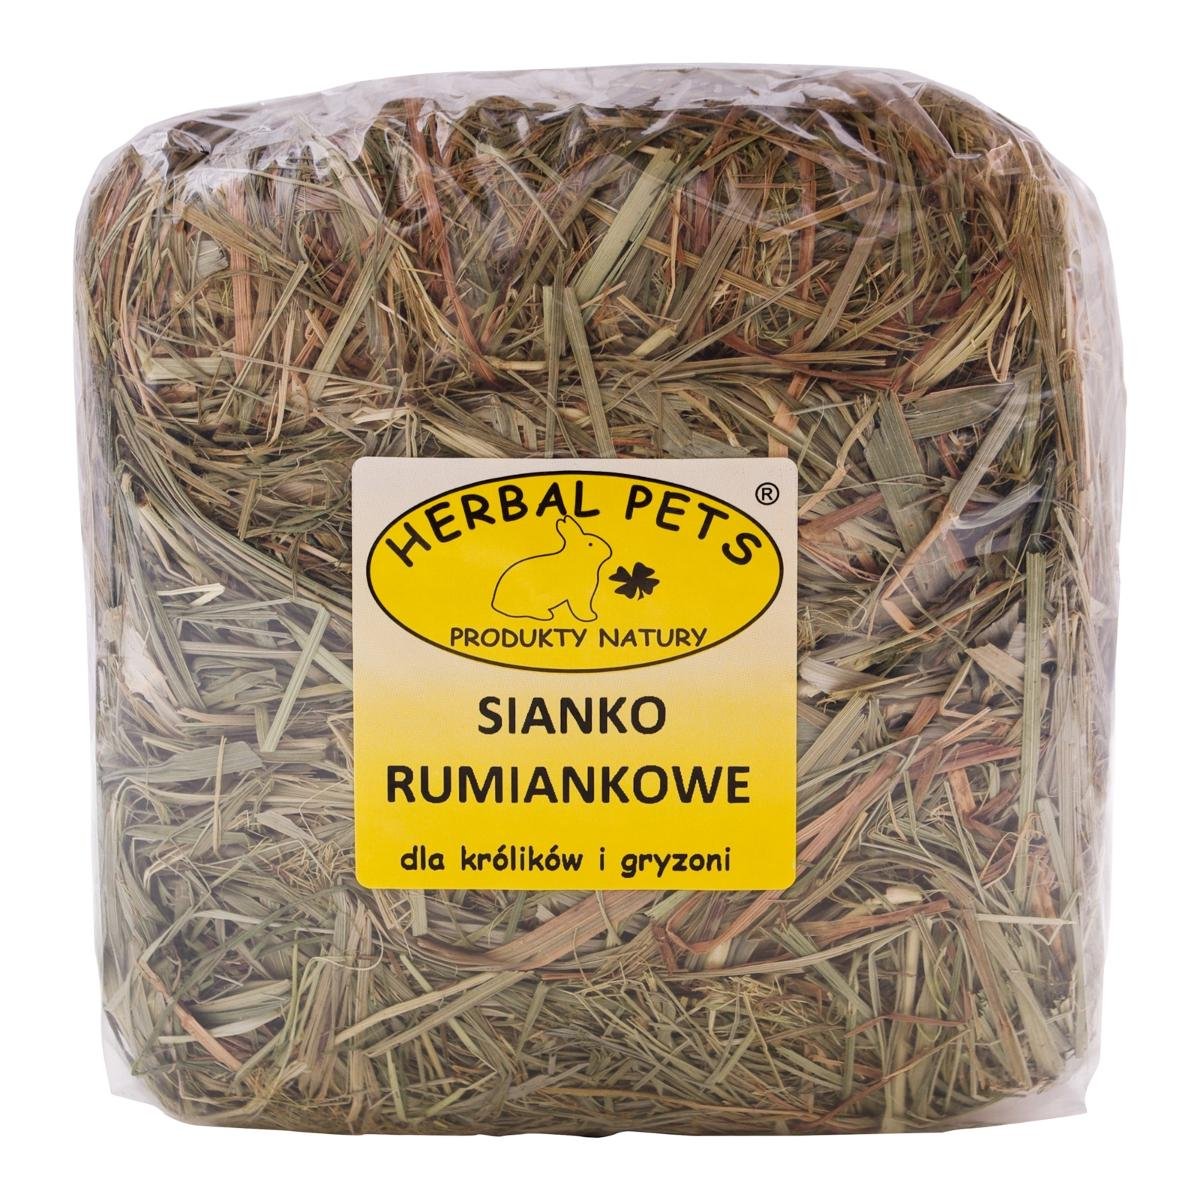 Herbal Pets SIANO RUMIANKOWE 300g